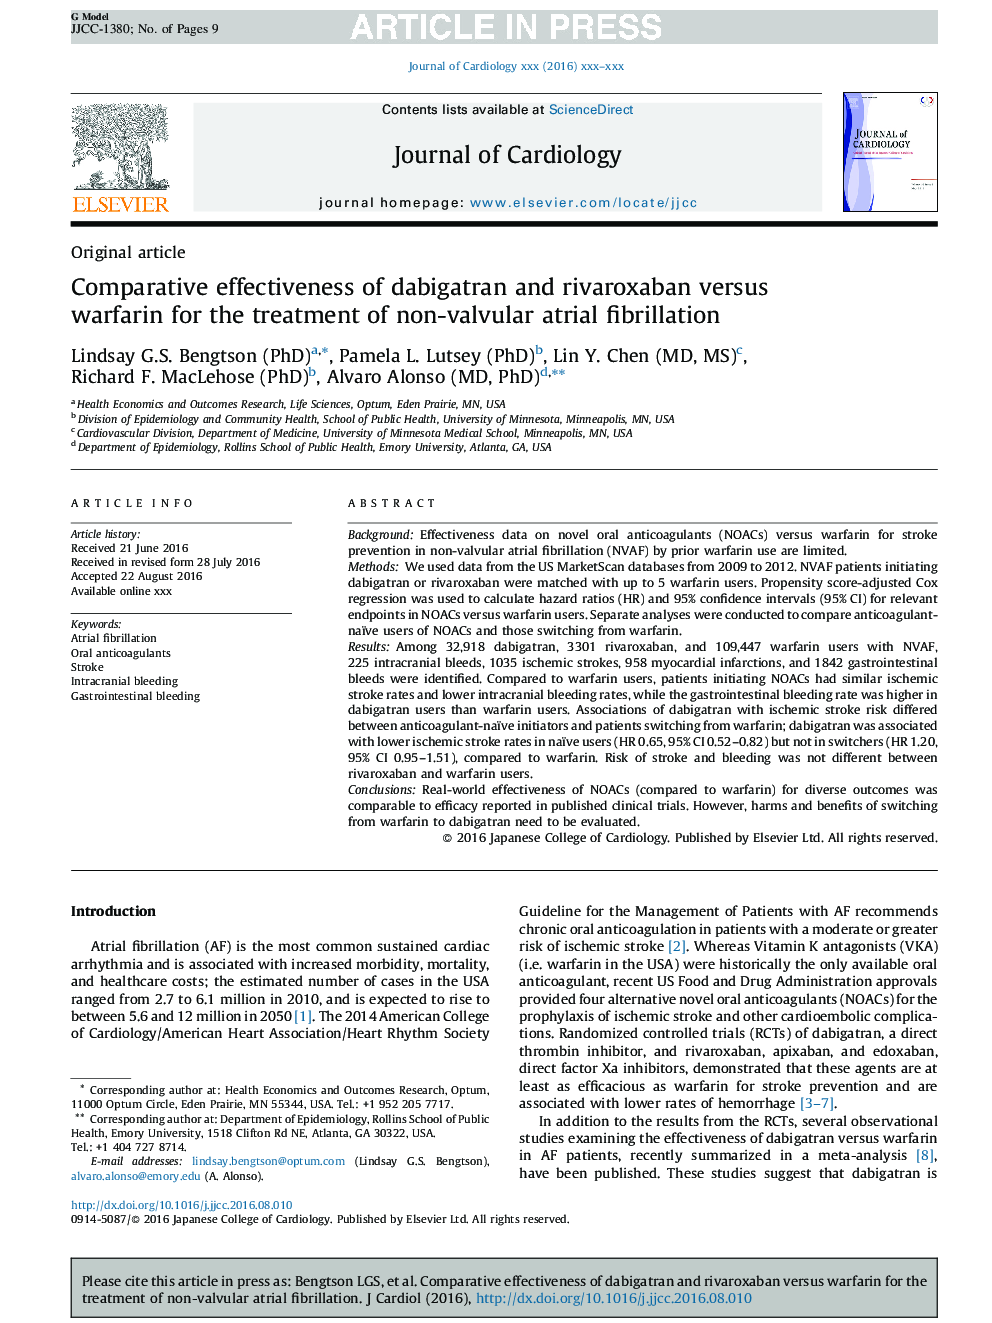 Comparative effectiveness of dabigatran and rivaroxaban versus warfarin for the treatment of non-valvular atrial fibrillation